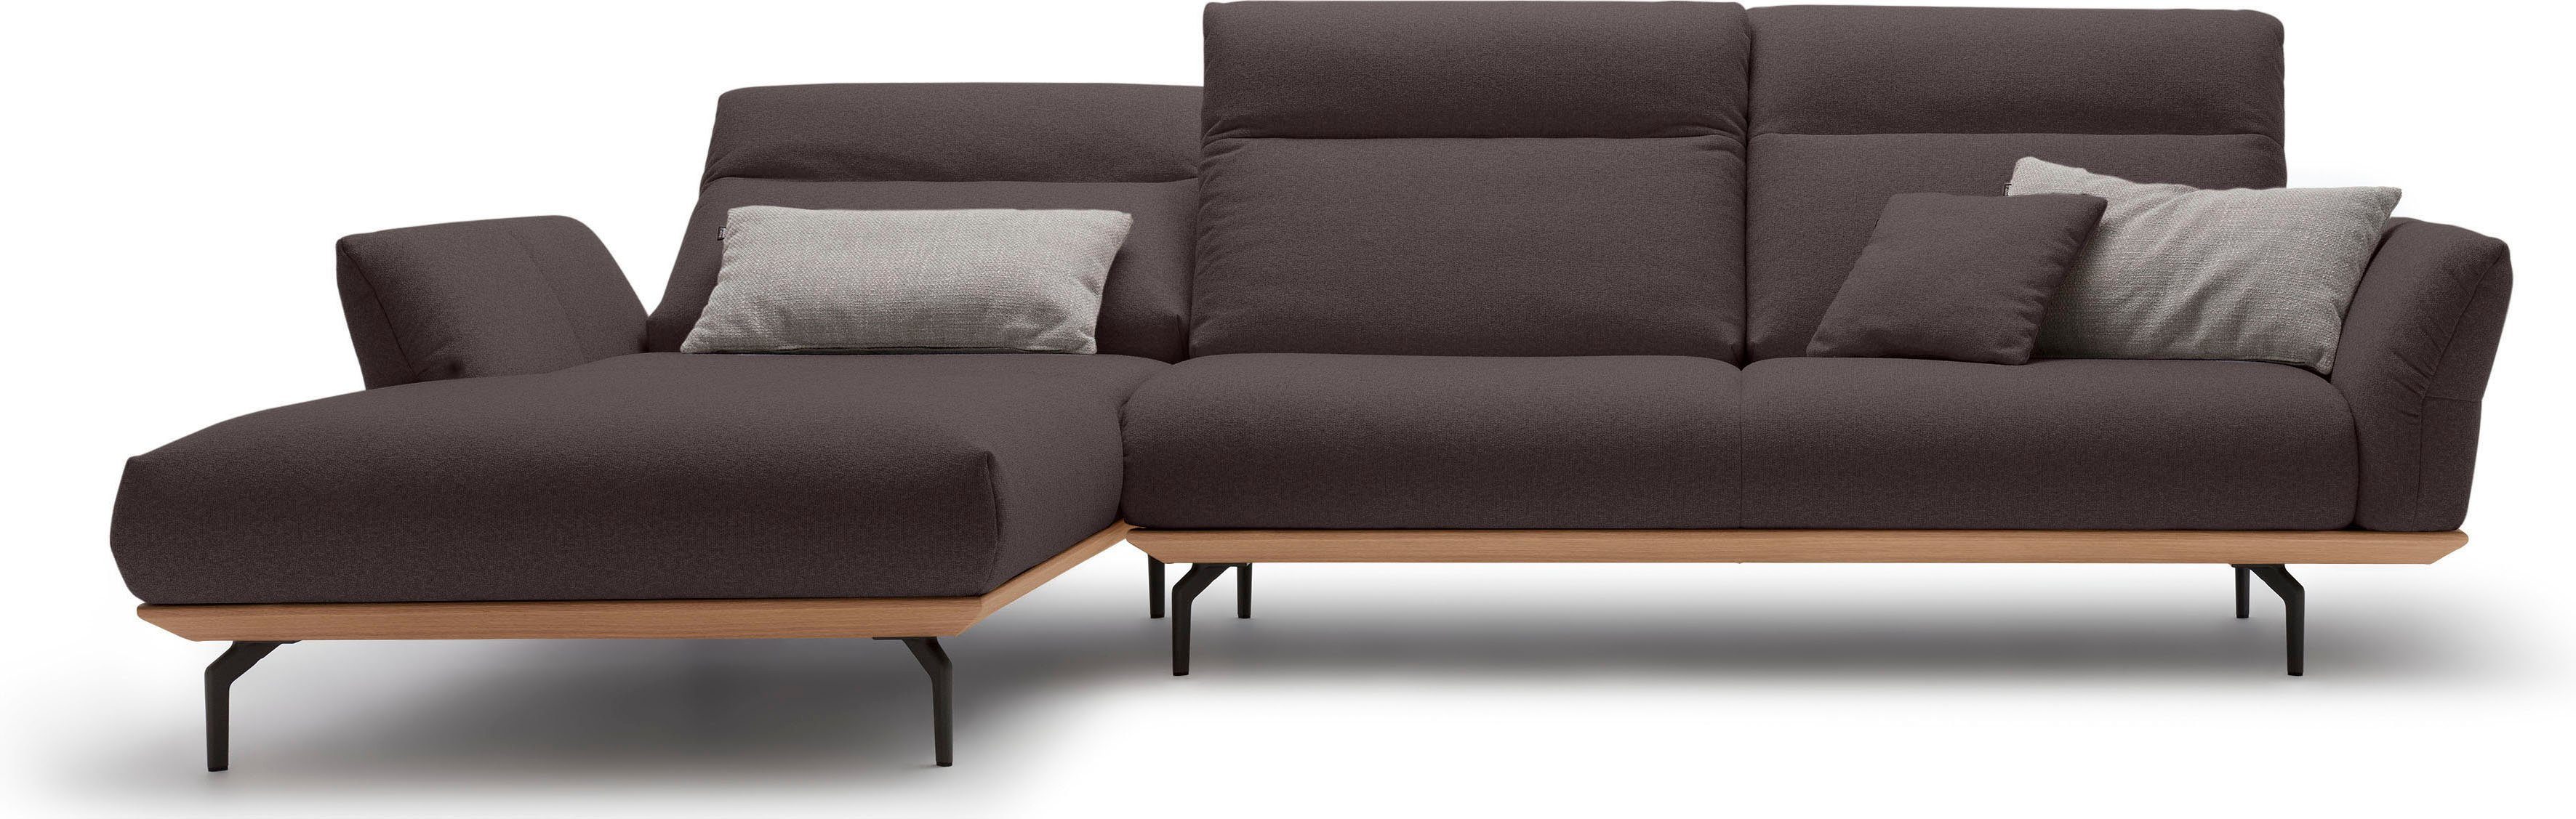 hülsta sofa Ecksofa hs.460, Sockel in Eiche, Winkelfüße in Umbragrau, Breite 318 cm | Ecksofas